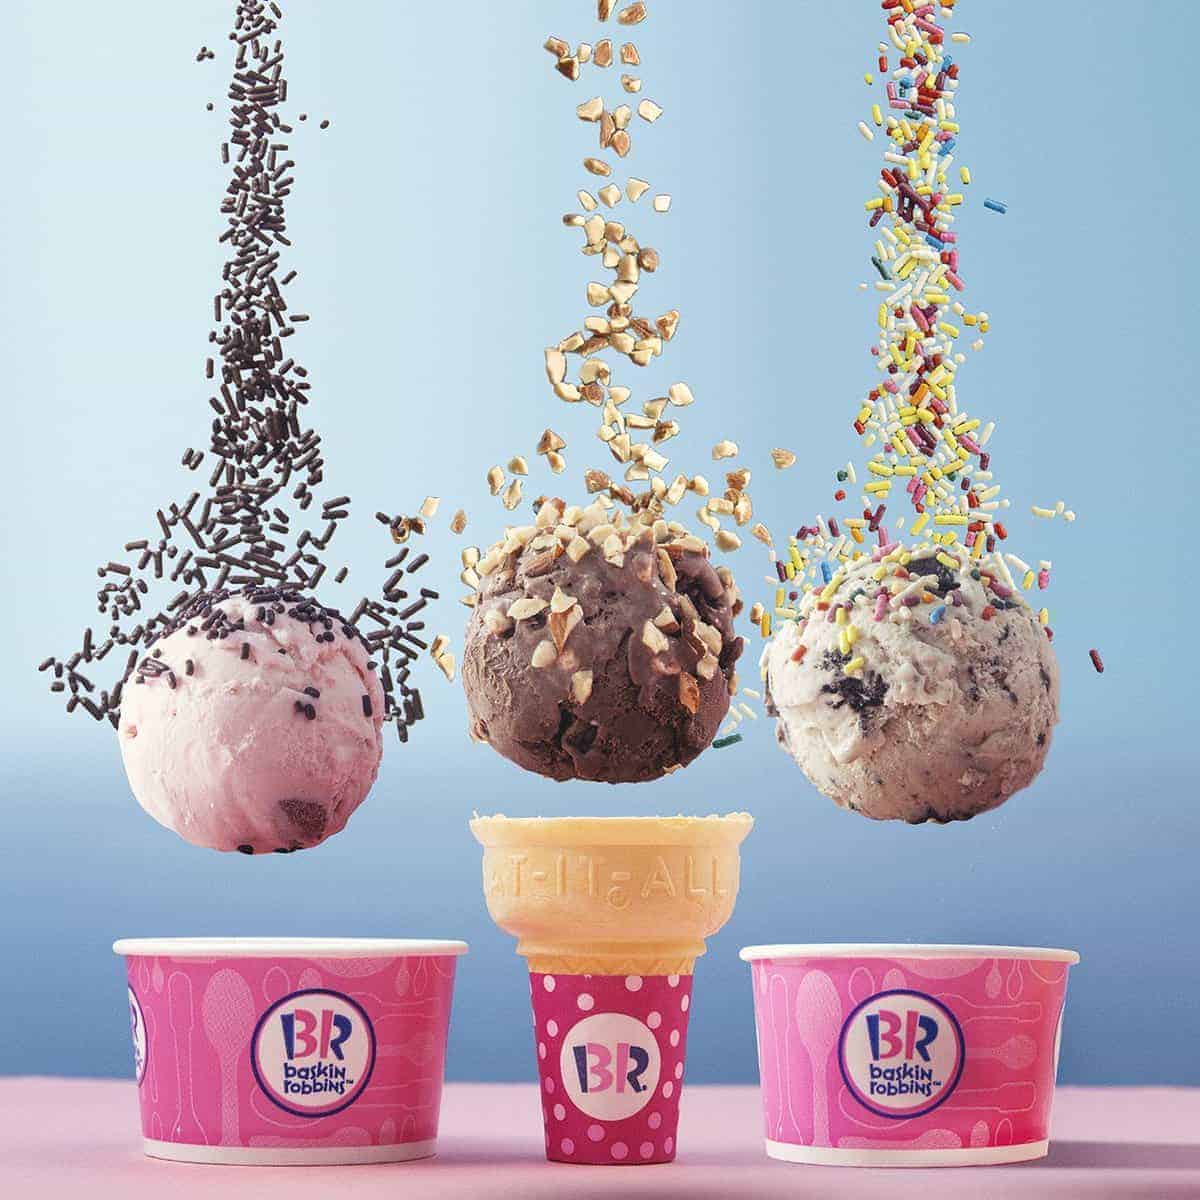 Baskin-Robbins: Get ice cream scoop for $1.70 - Living On ...